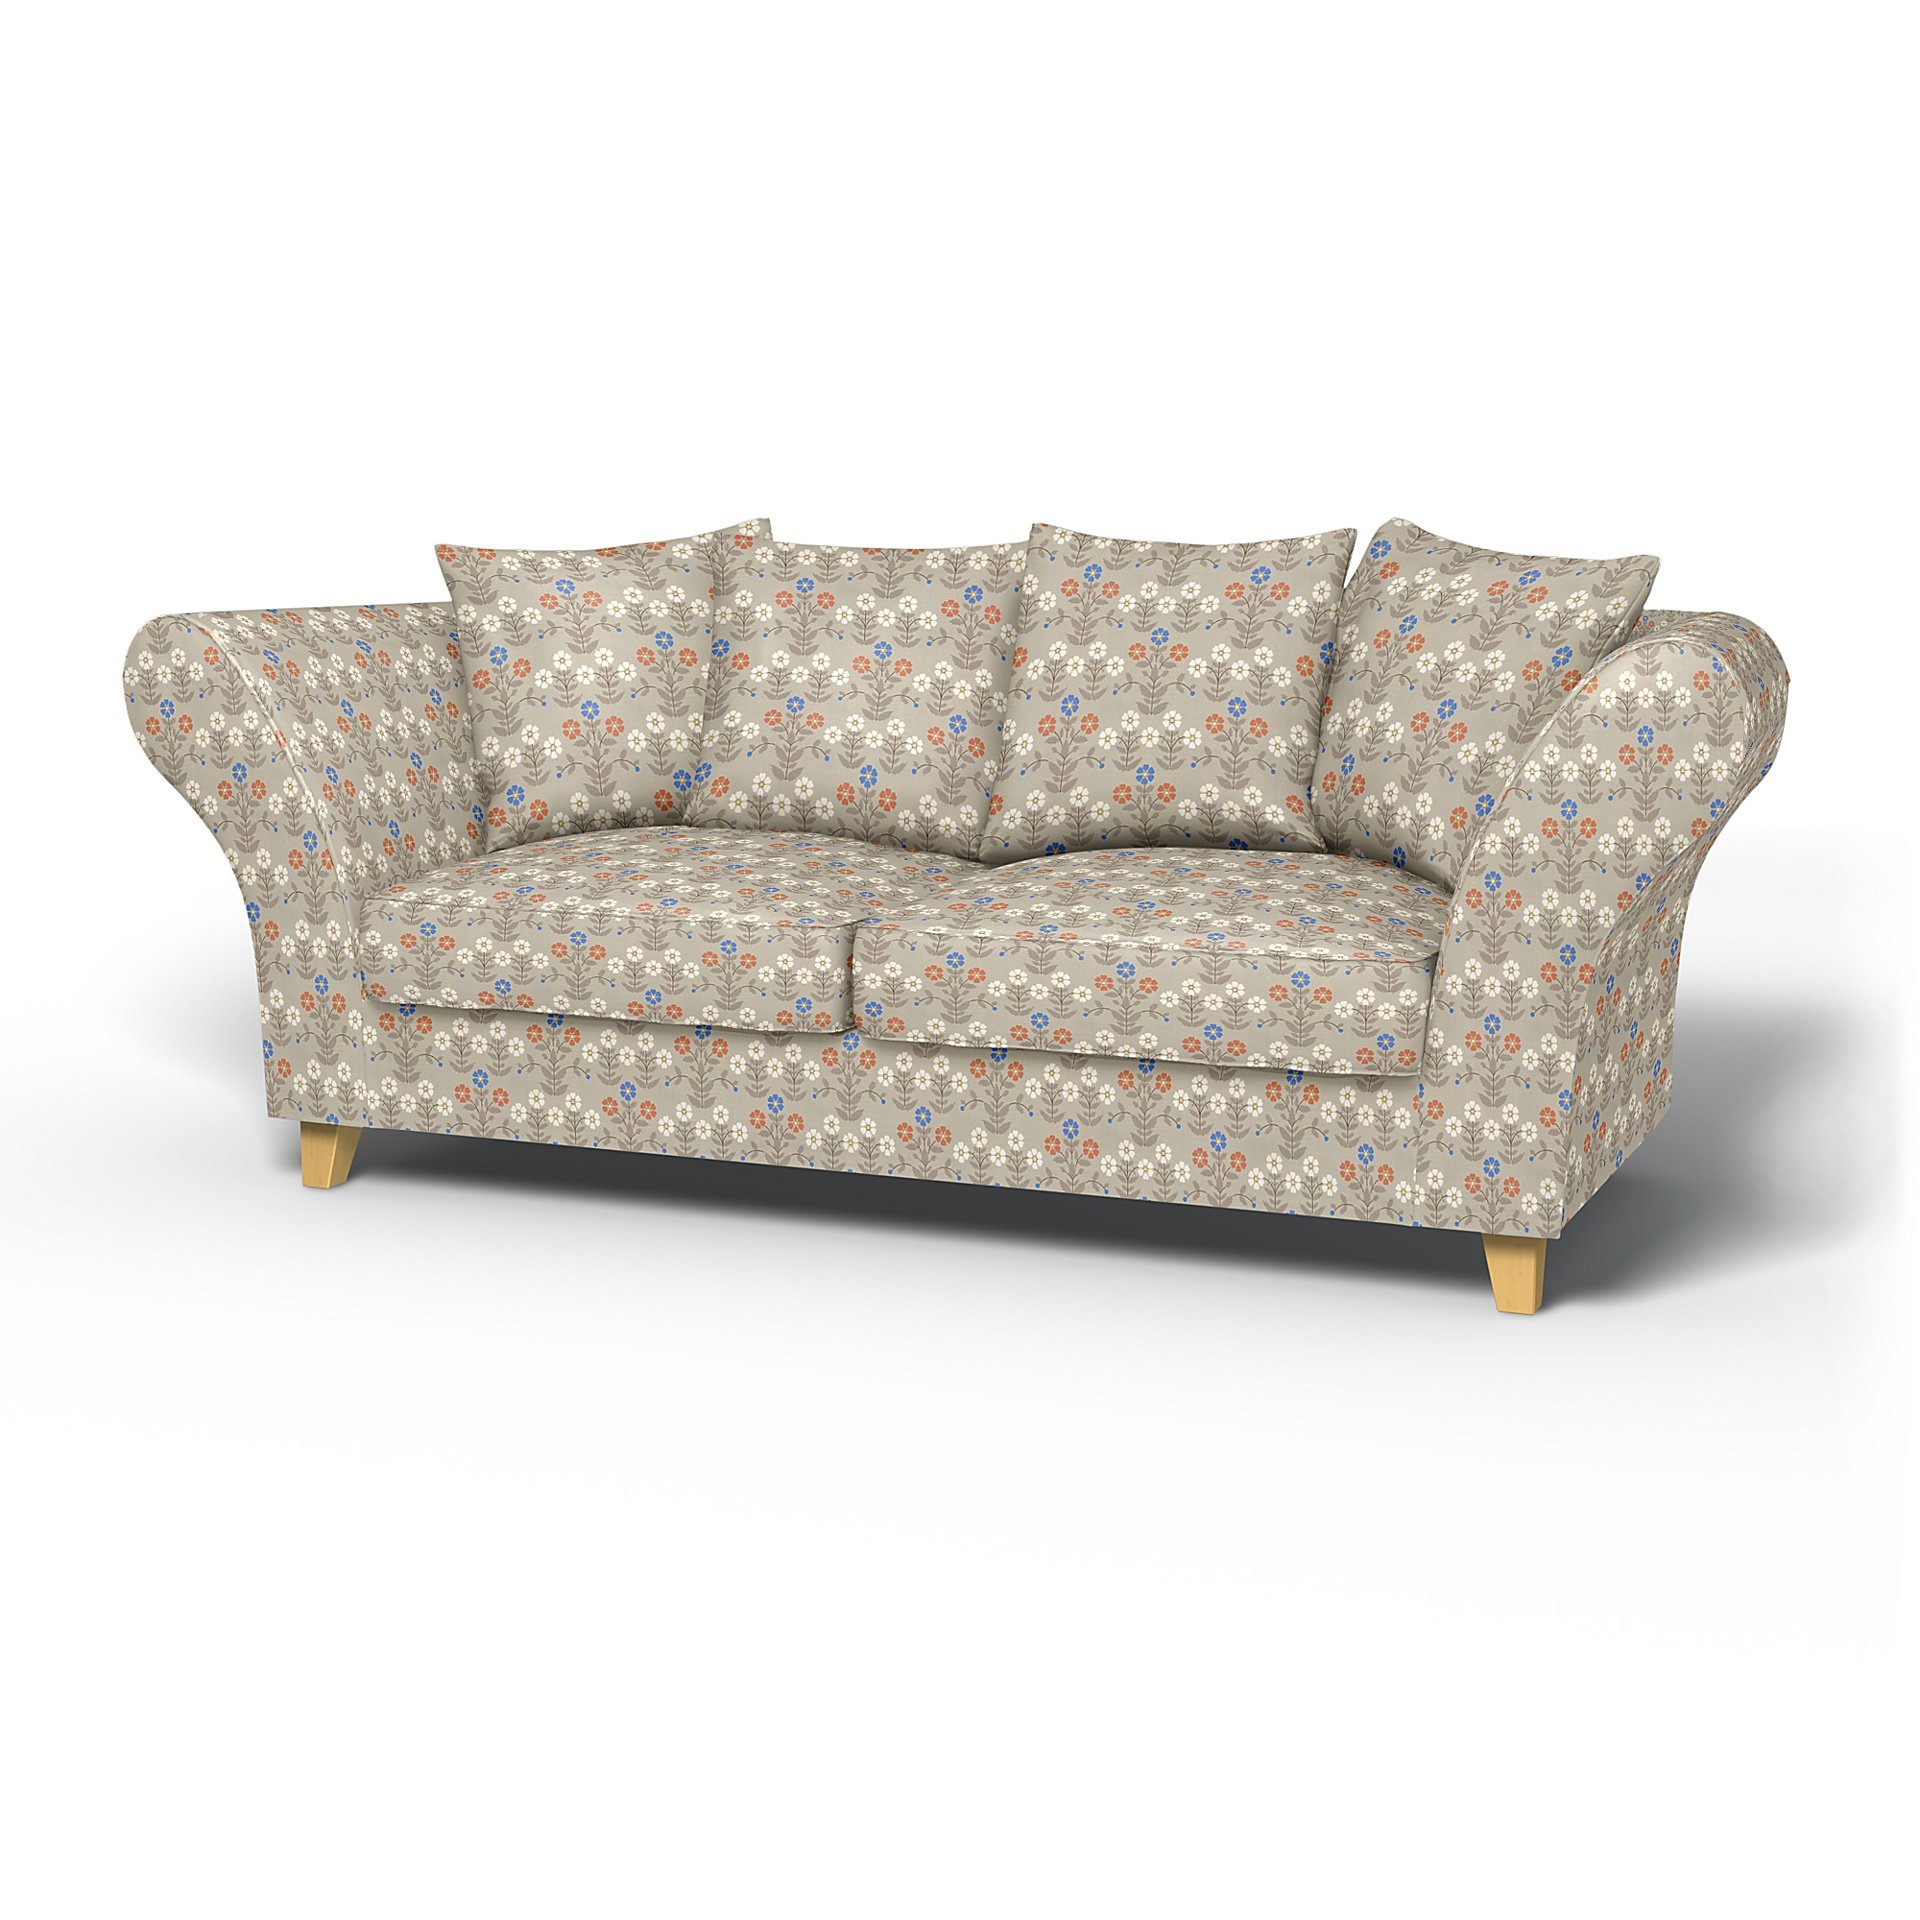 IKEA - Backa 2.5 Seater Sofa Cover, Sippor Blue/Orange, BEMZ x BORASTAPETER COLLECTION - Bemz